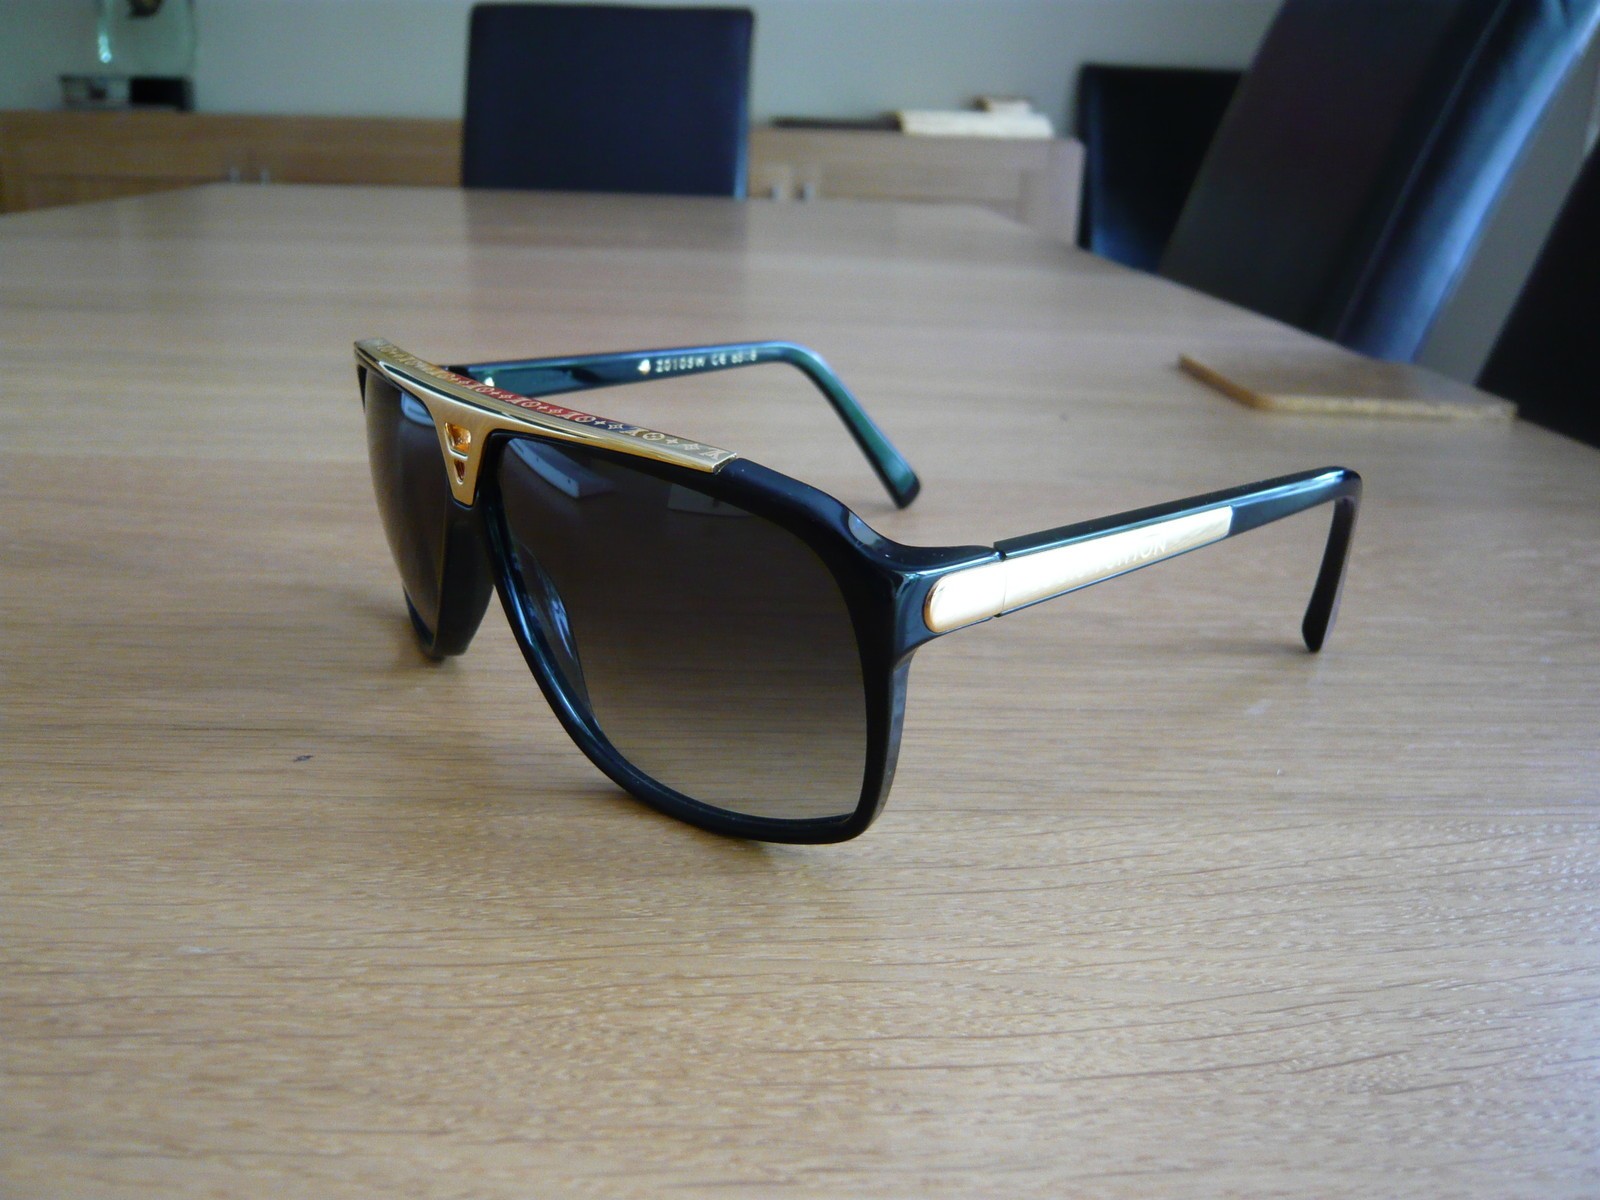 Louis Vuitton Evidence Sunglasses in Black